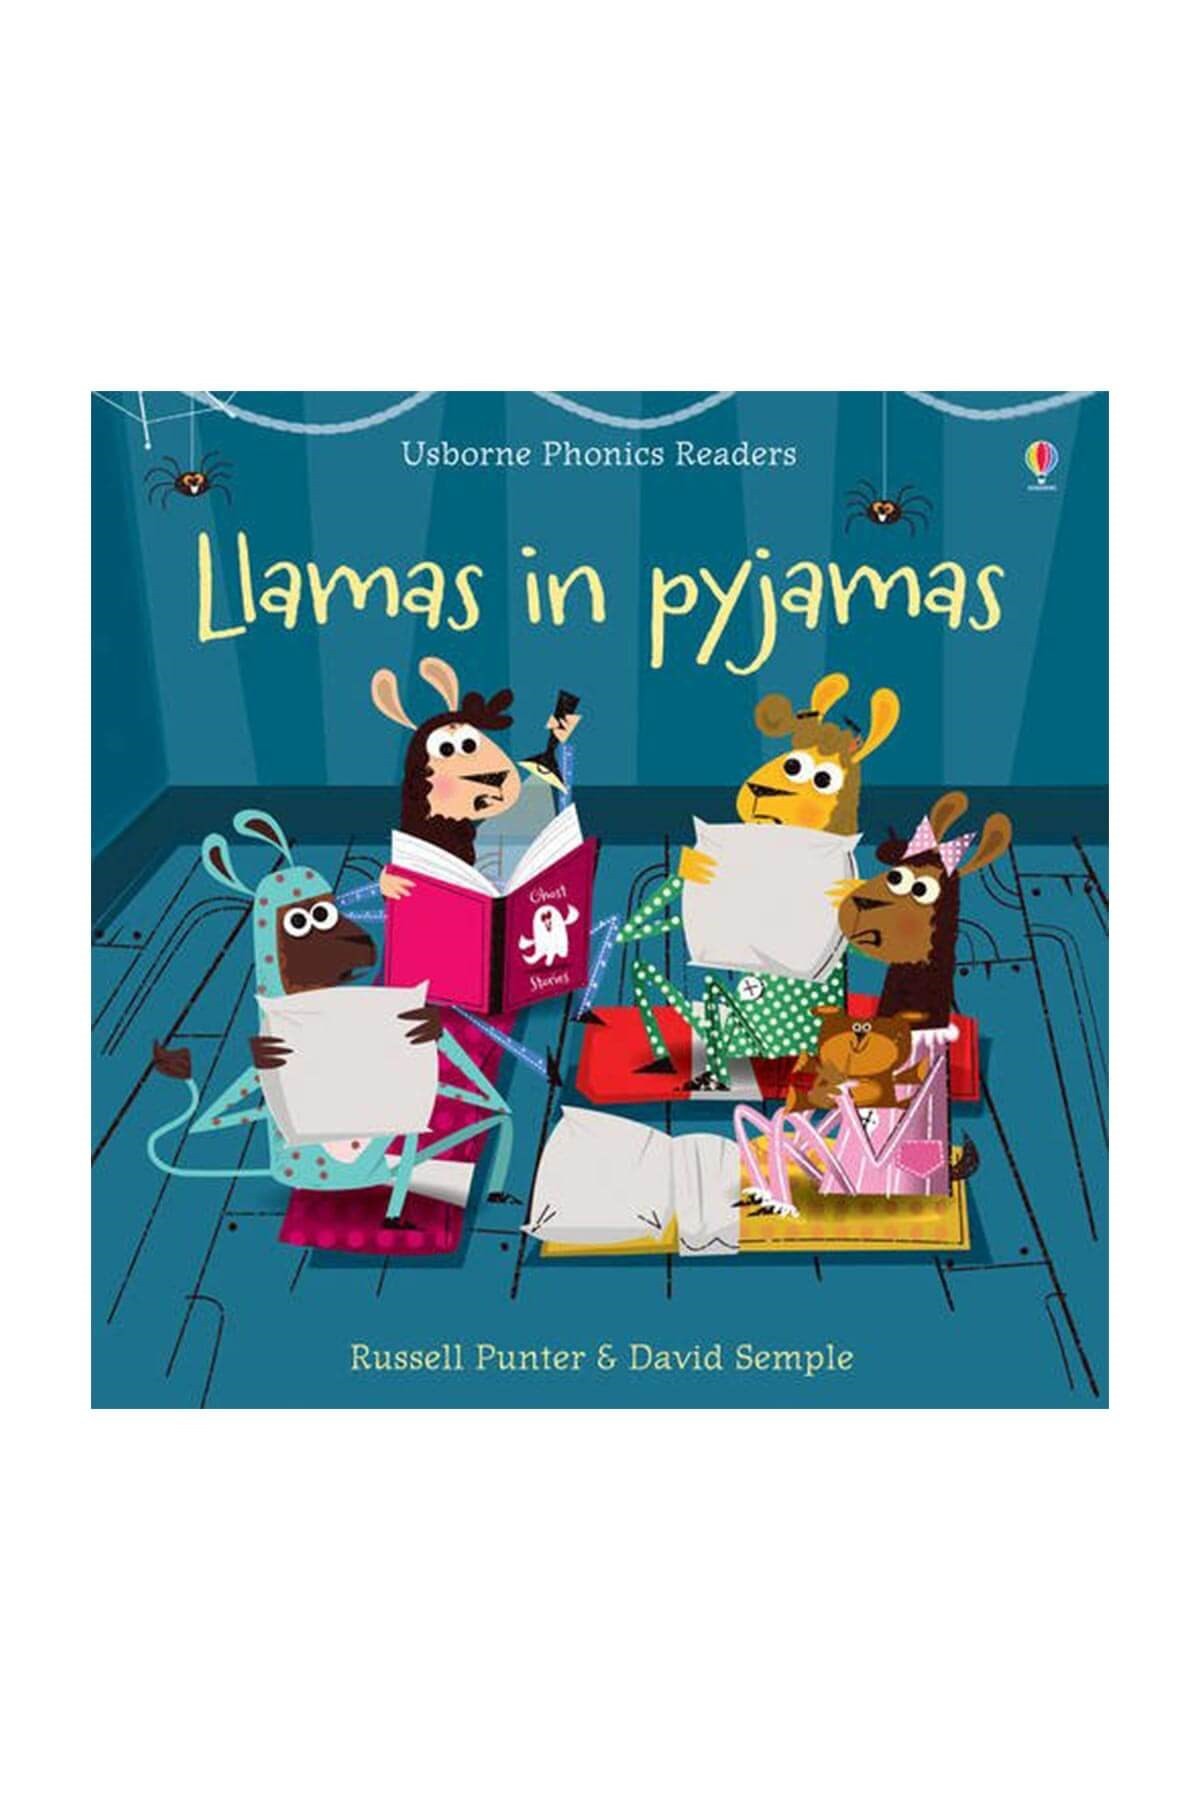 The Usborne Pho Llamas in Pyjamas